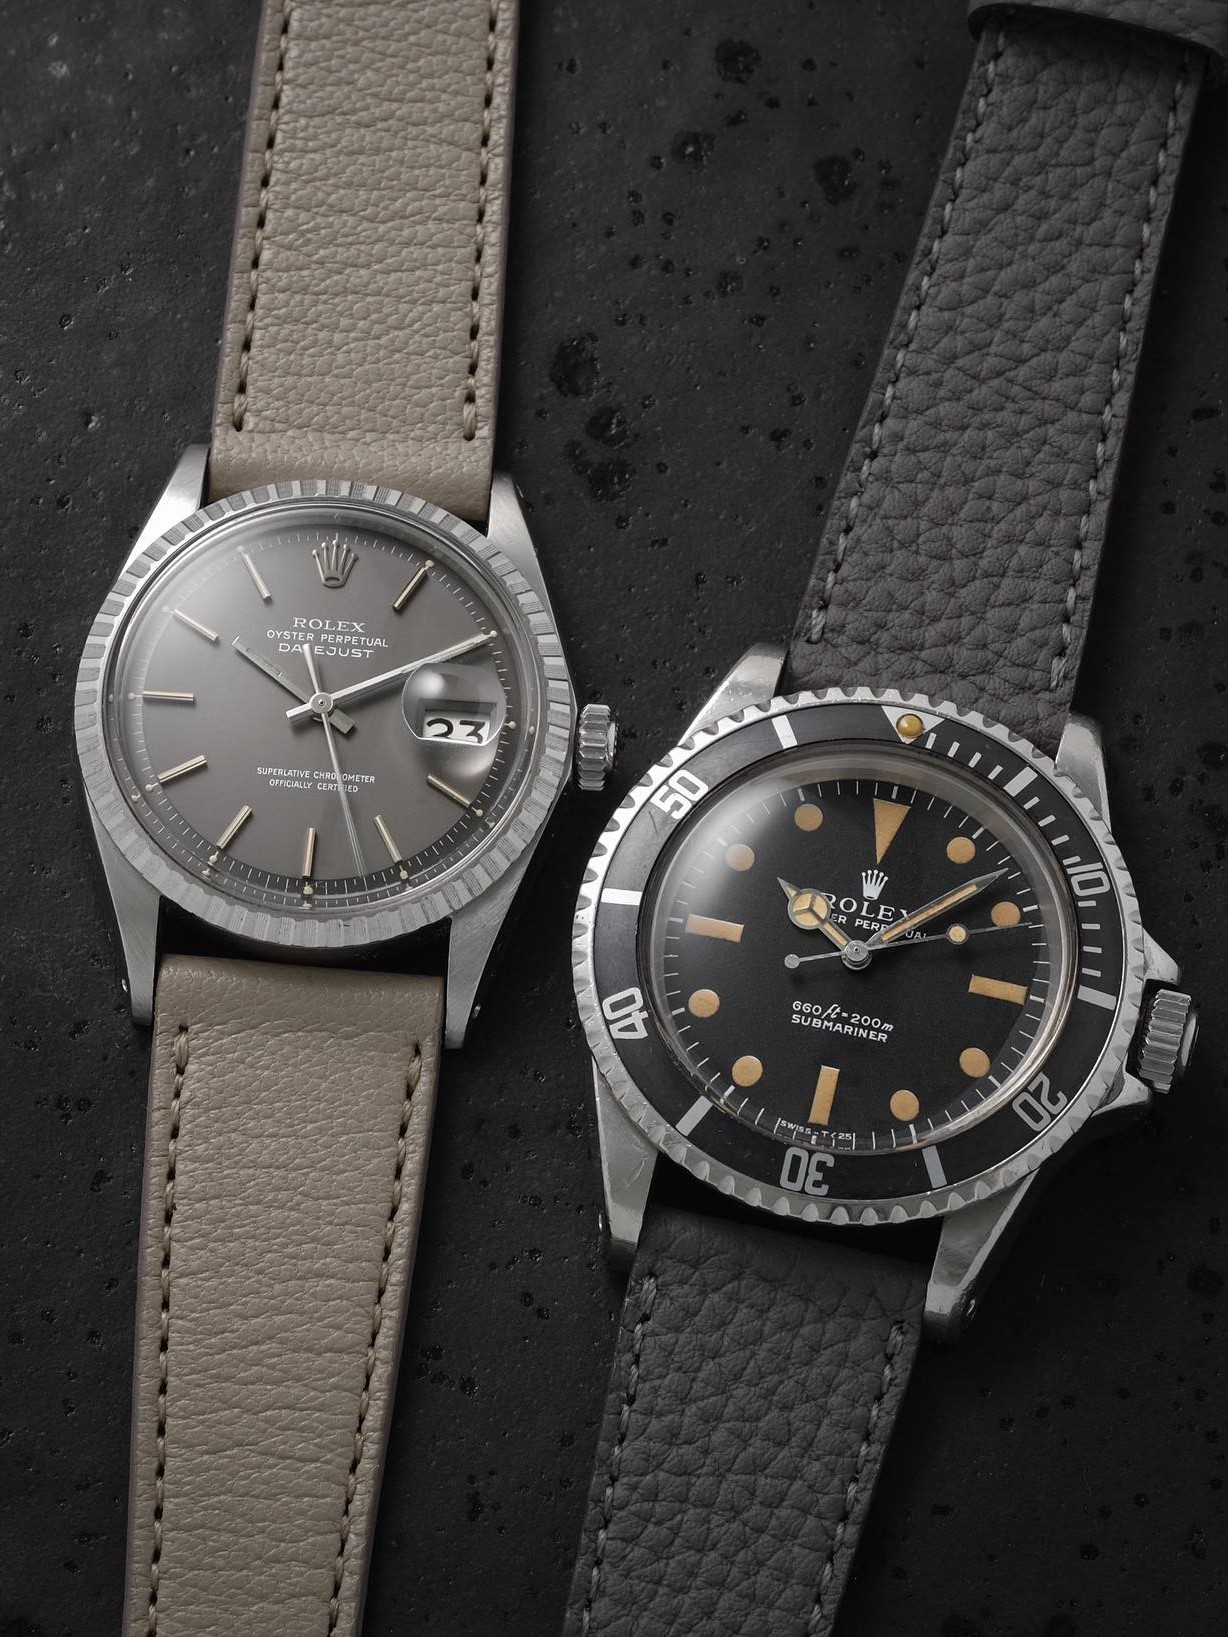 leather watch straps on Rolex watches by Veblenist